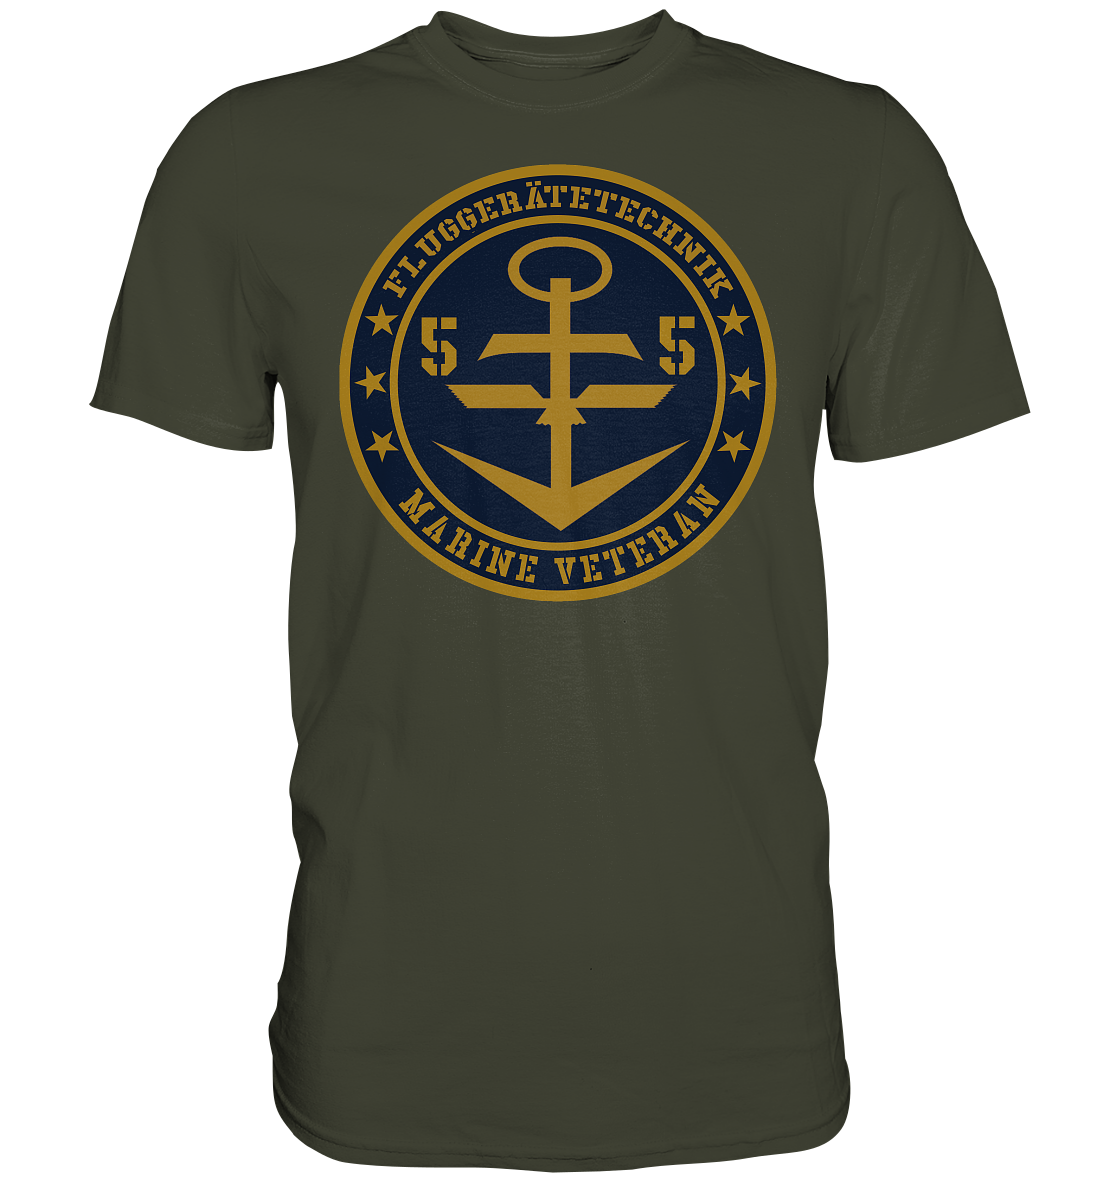 Marine Veteran 55er FLUGGERÄTETECHNIK - Premium Shirt